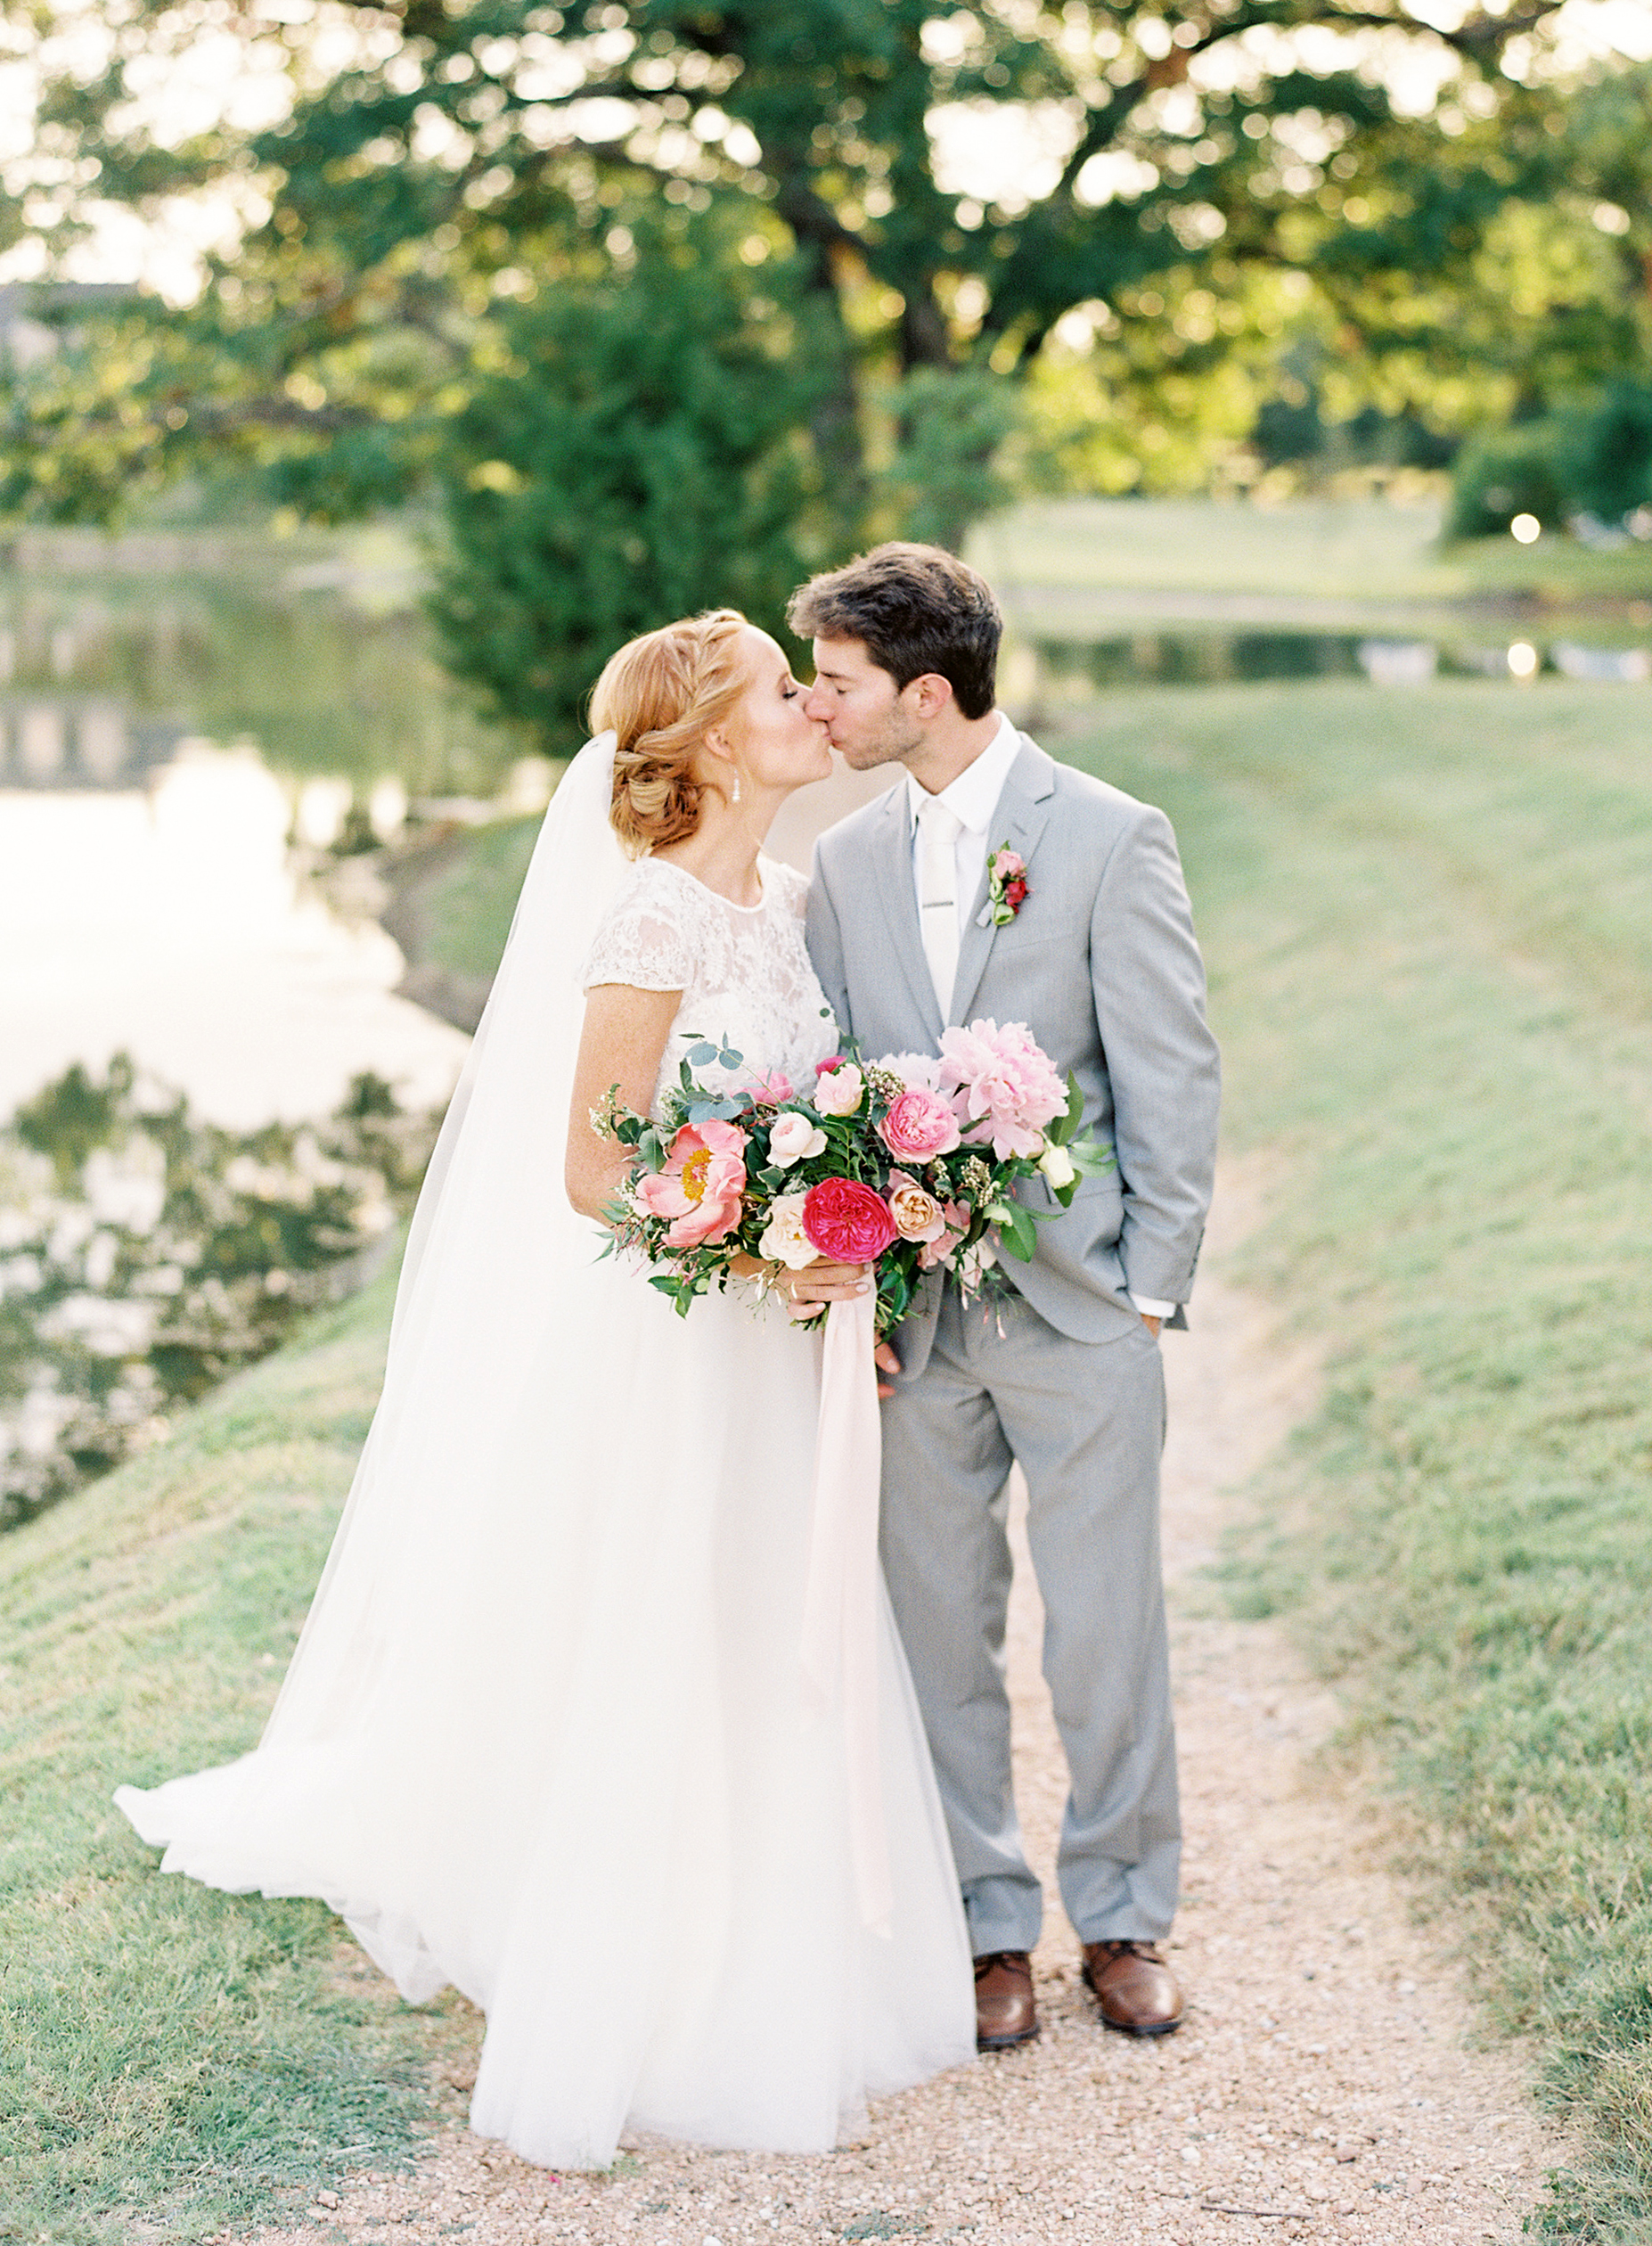 Amy & Cory: Vibrant Summer Wedding - Lindsey Brunk